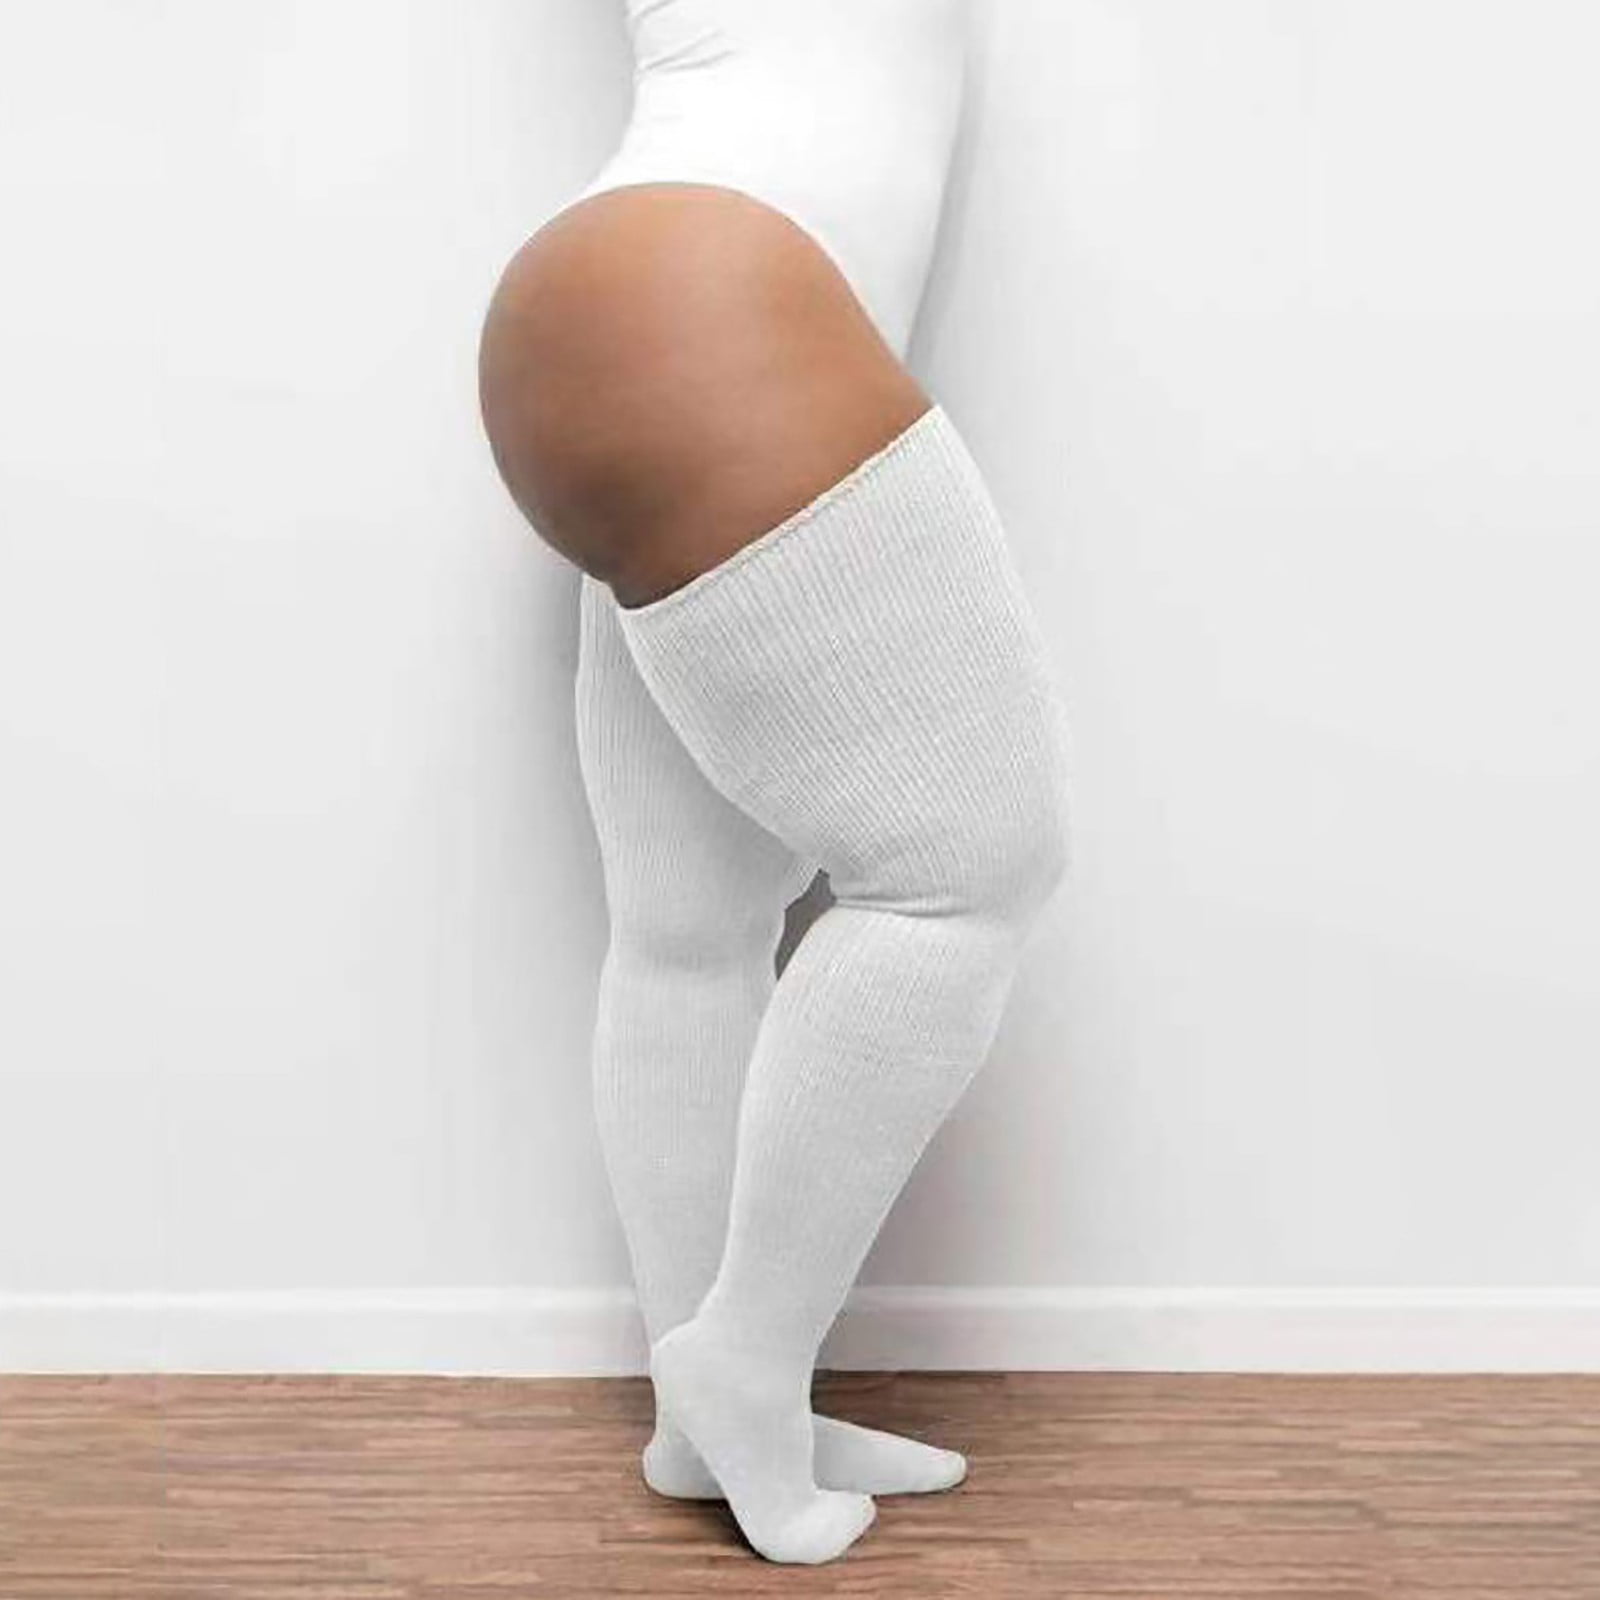 anna casper recommends White Thigh High Stockings With Garter Belt